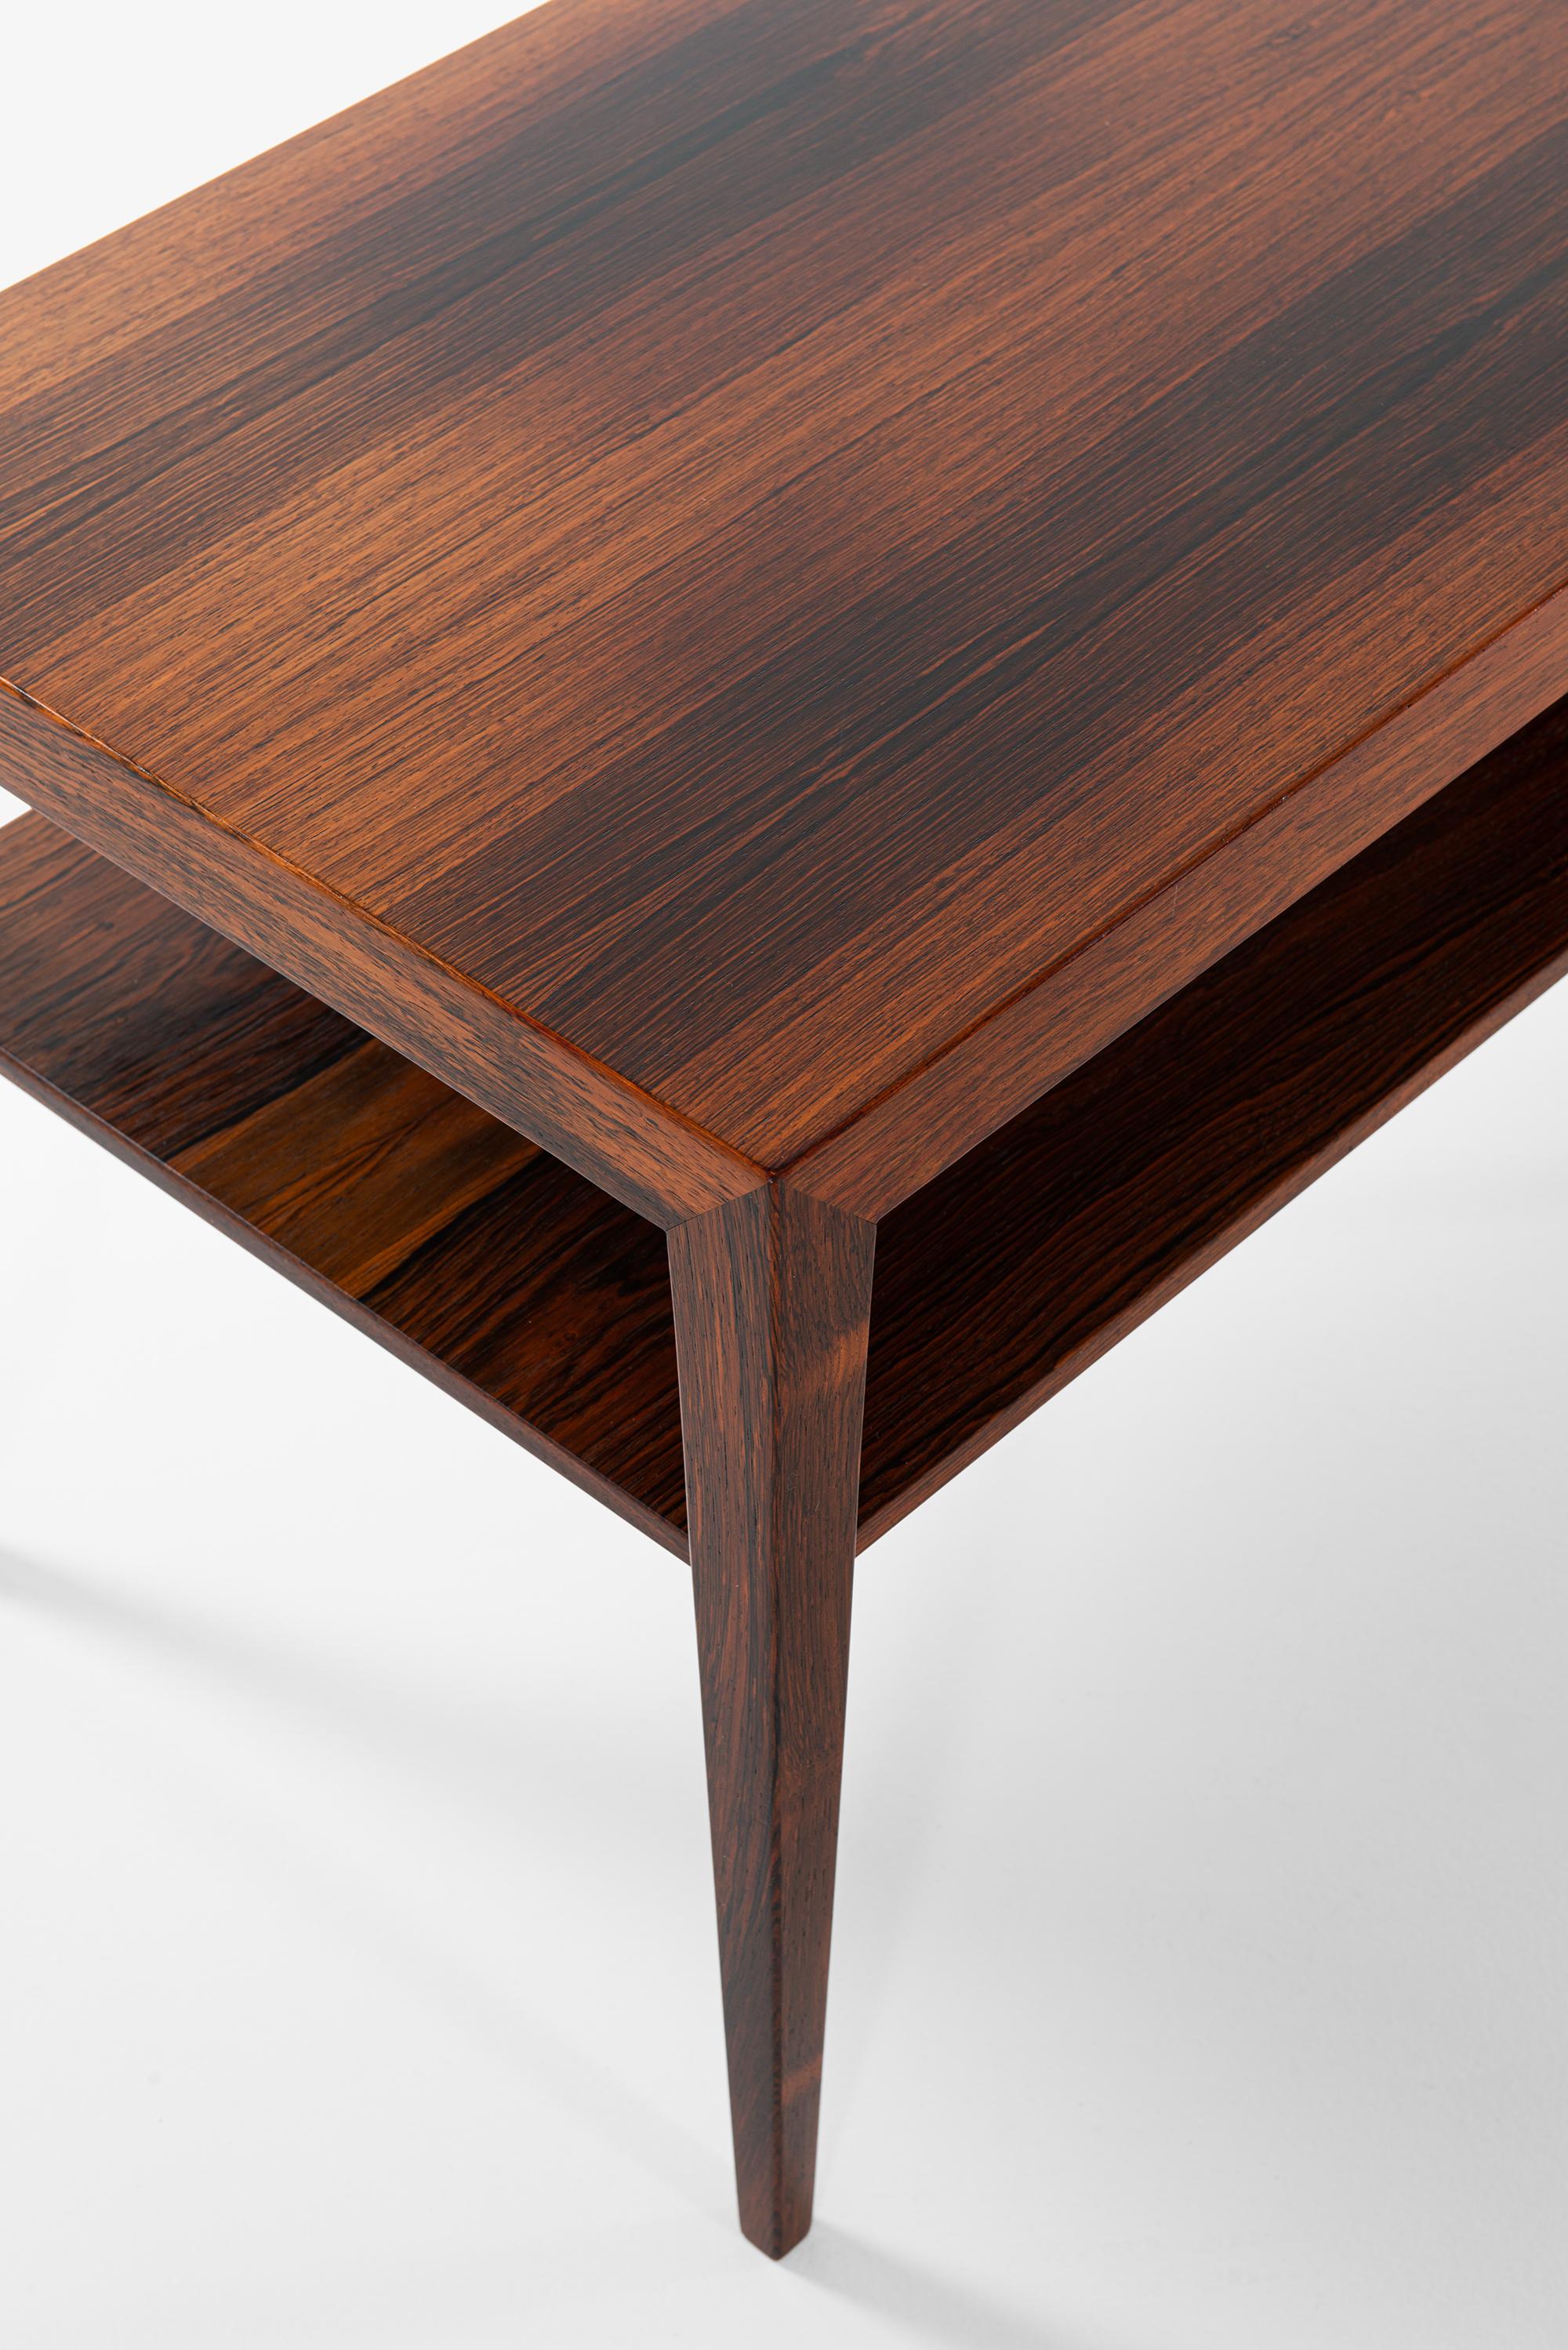 Rare side table designed by Severin Hansen. Produced by Haslev Møbelsnedkeri in Denmark.